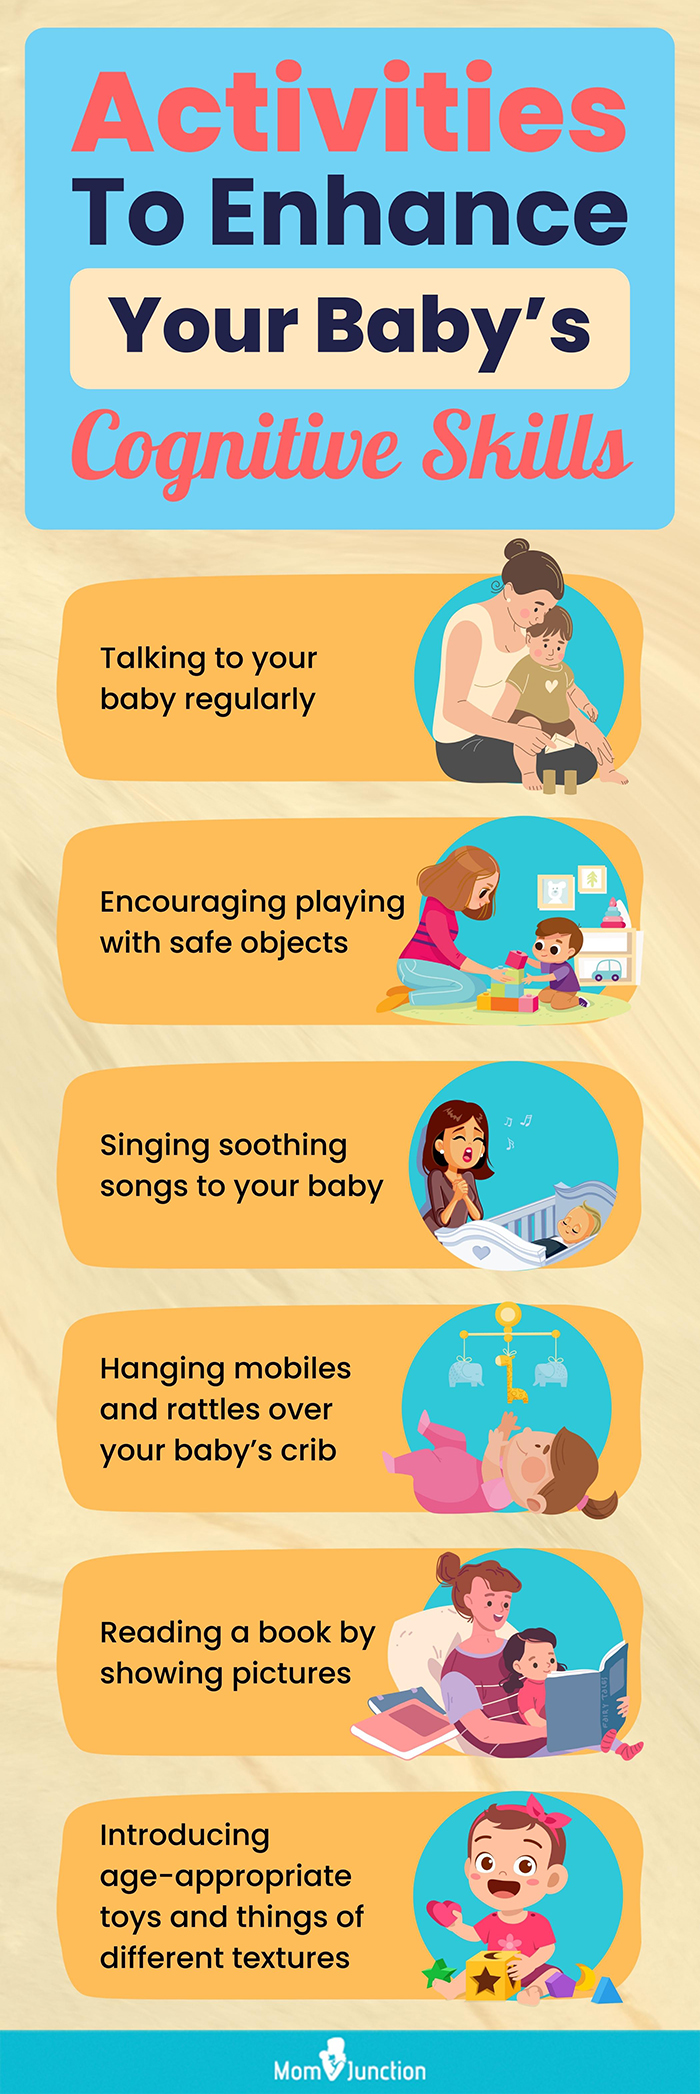 10 Cognitive Activities For Infants To Boost Development | MomJunction